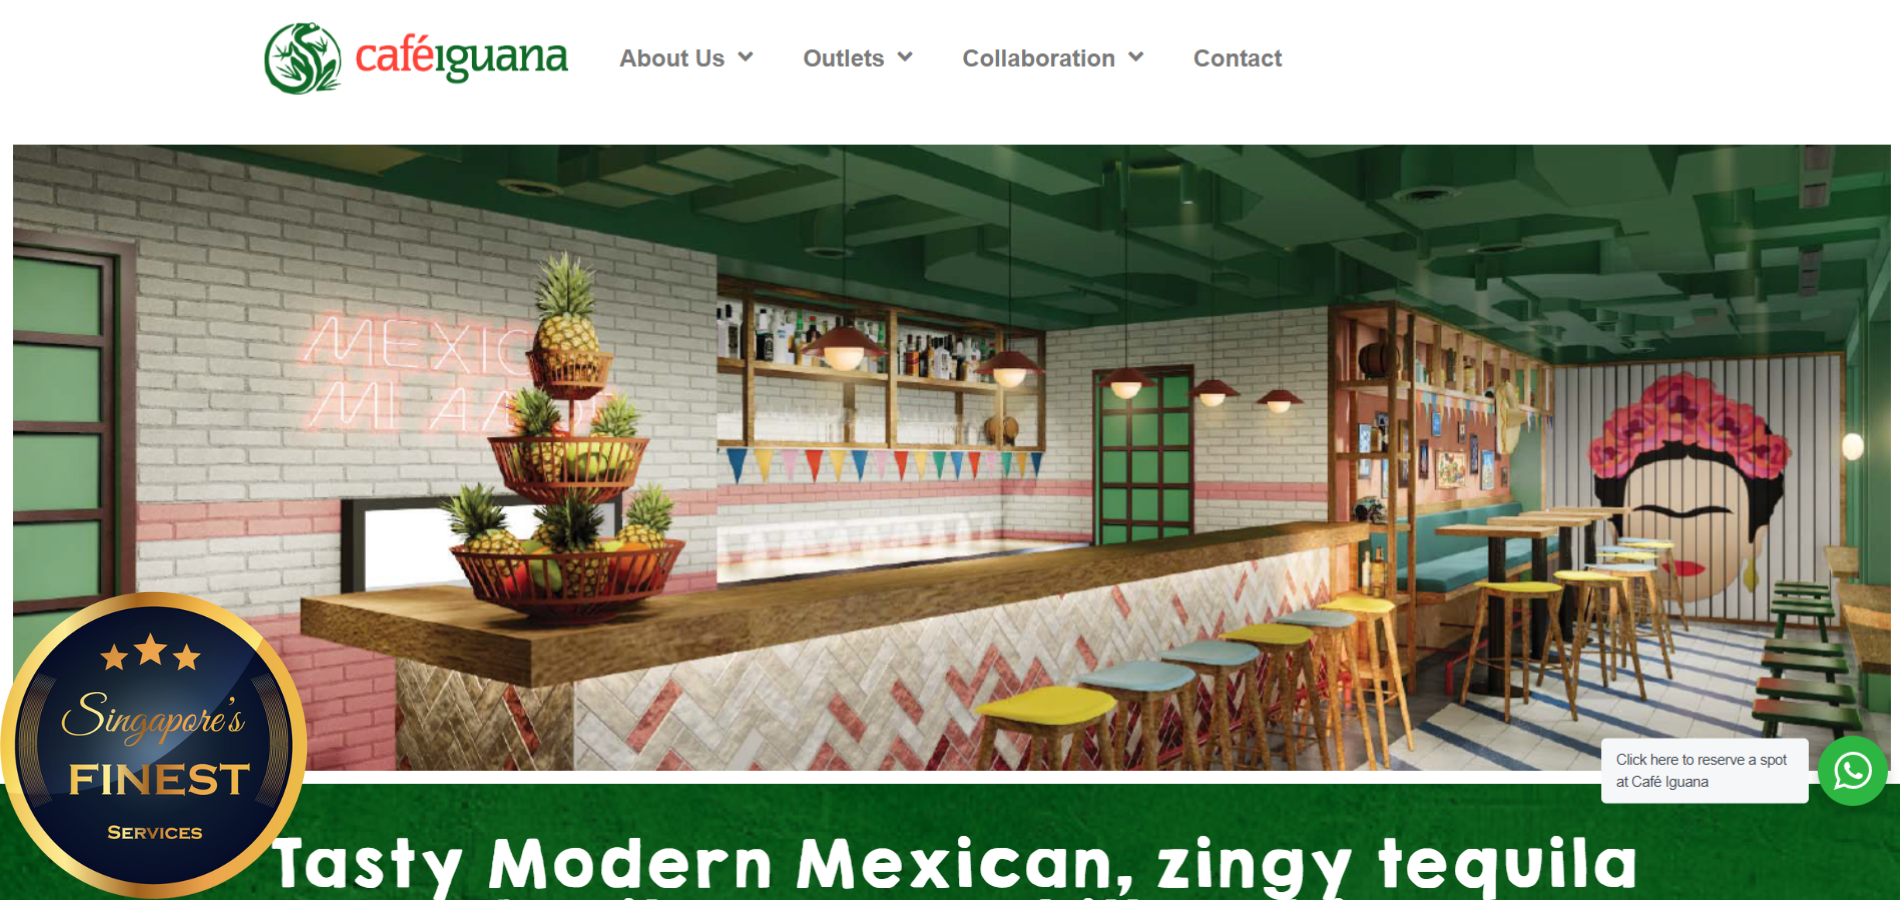 Best Mexican Restaurants in Singapore